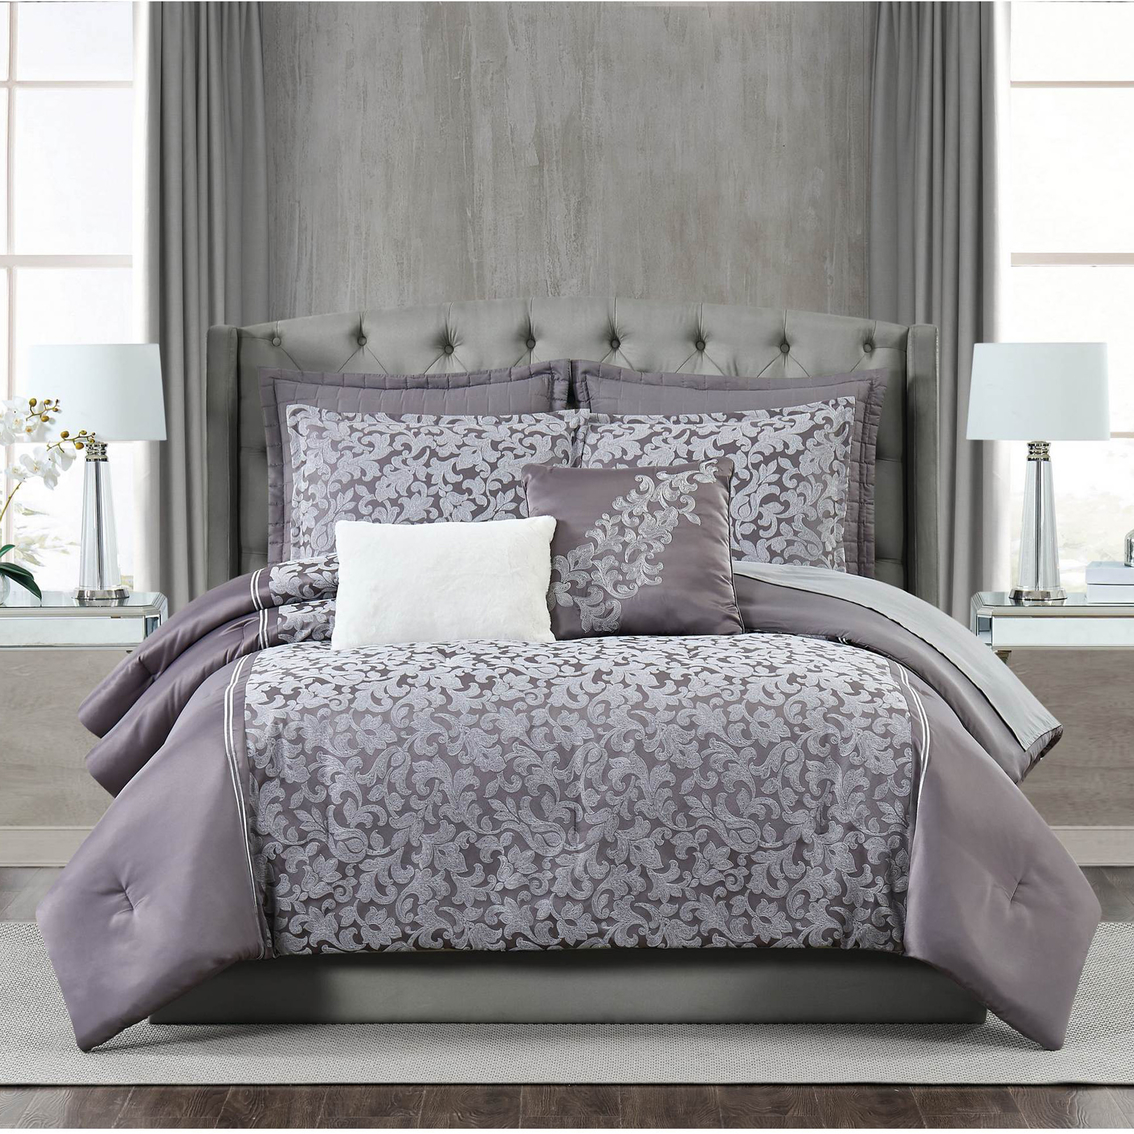 5th Avenue Lux Westbury 7 Pc. Comforter Set | Bedding Sets | Household ...